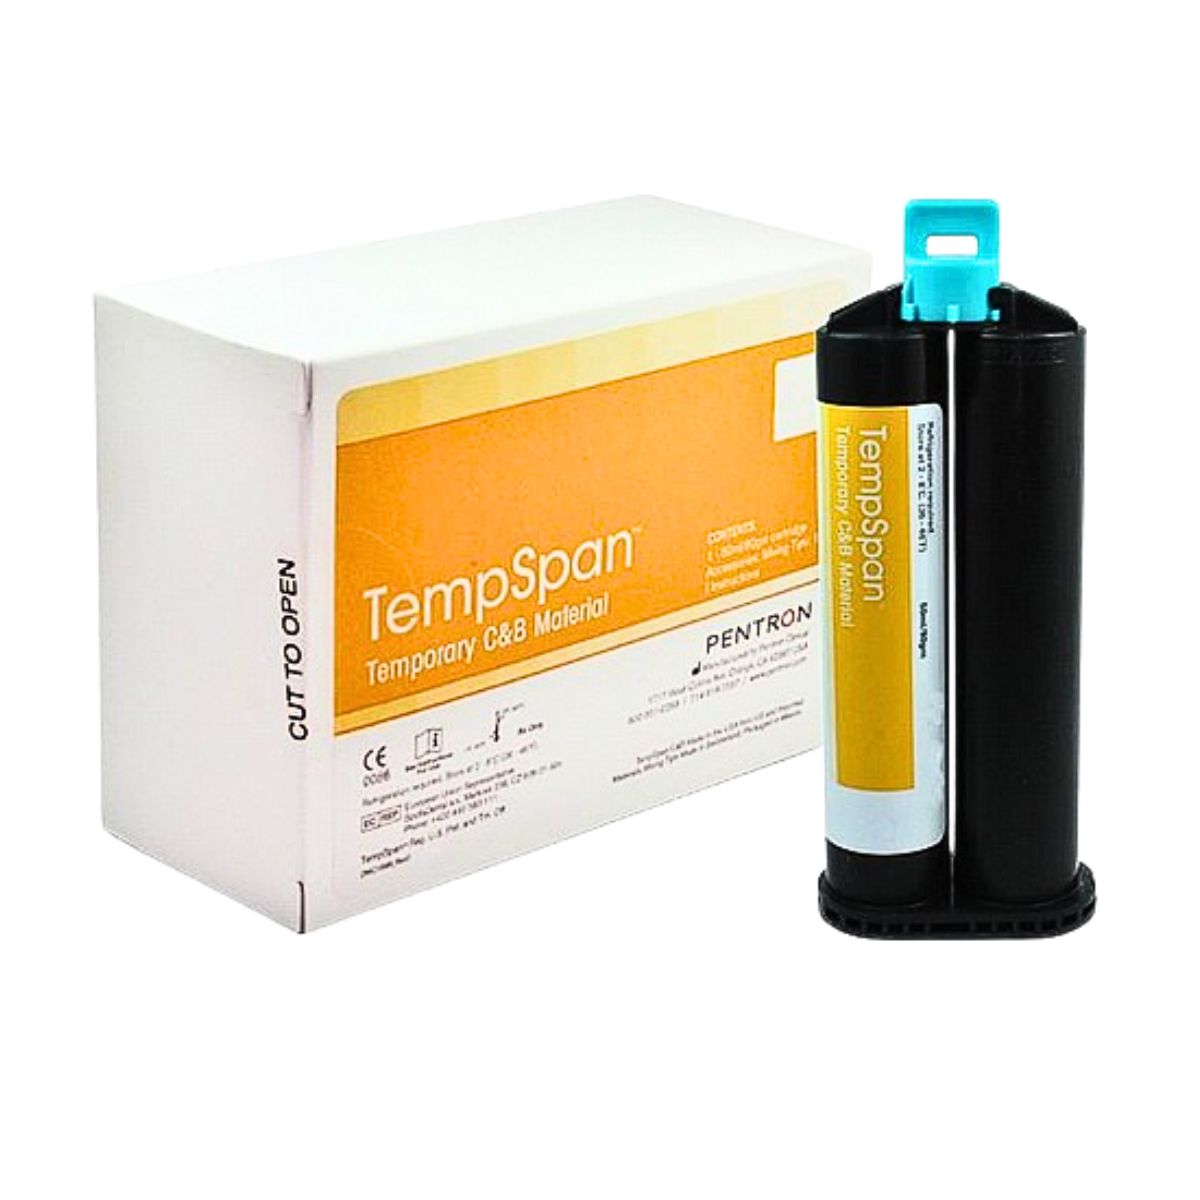 Pentron Tempspan Temporary Crown and Bridge Dental Material 80g